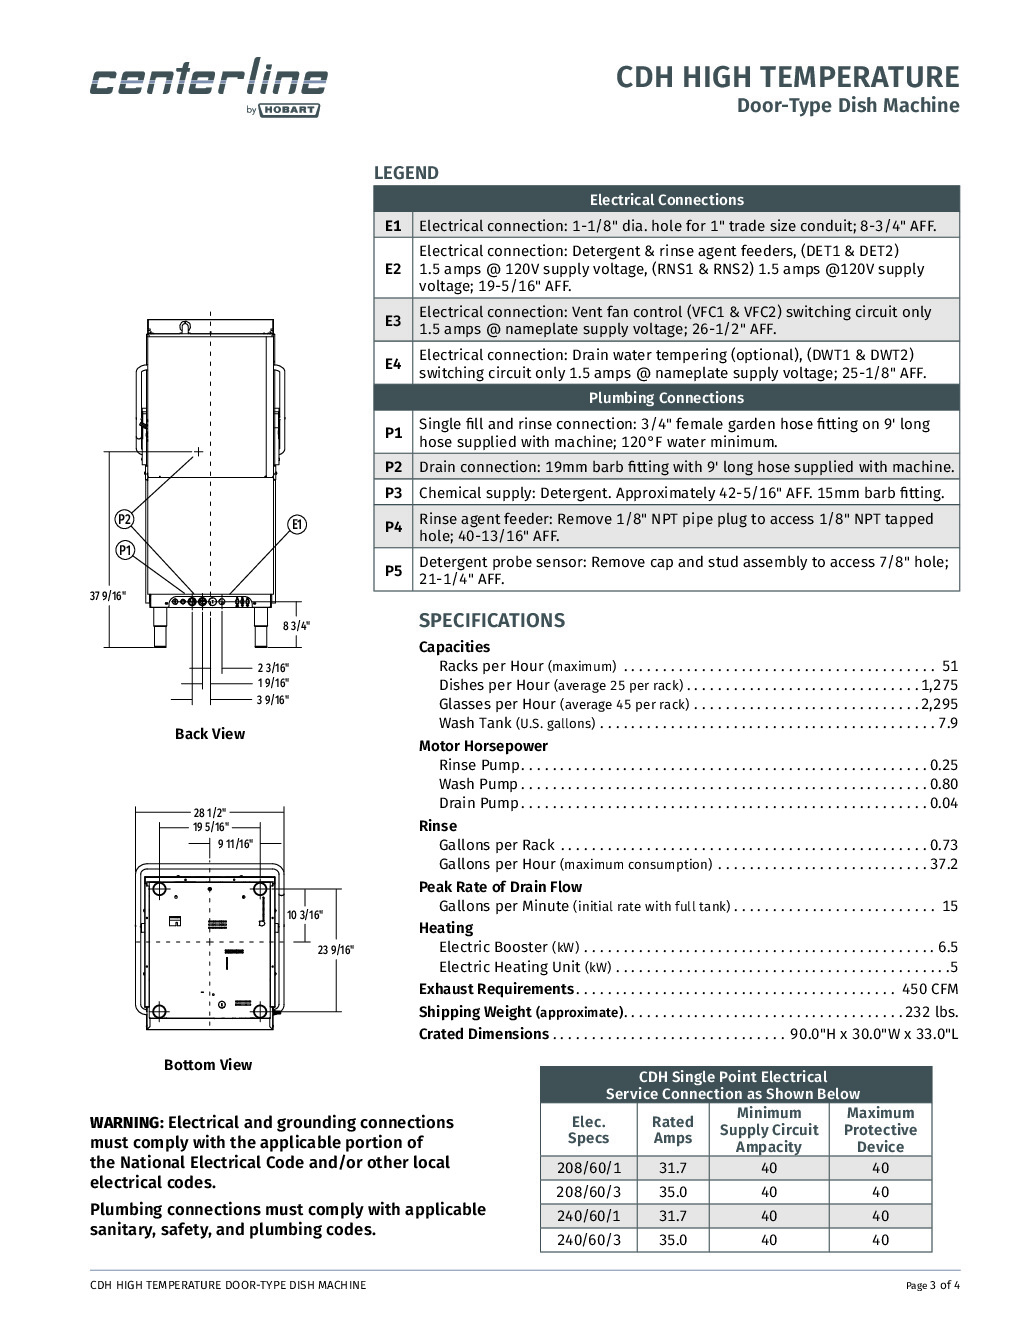 Centerline by Hobart CDH-1 Door Type Dishwasher, 51 Racks/Hr -38 Gal/Hr -High Temp w/ Booster -1 Wash Cycle/17